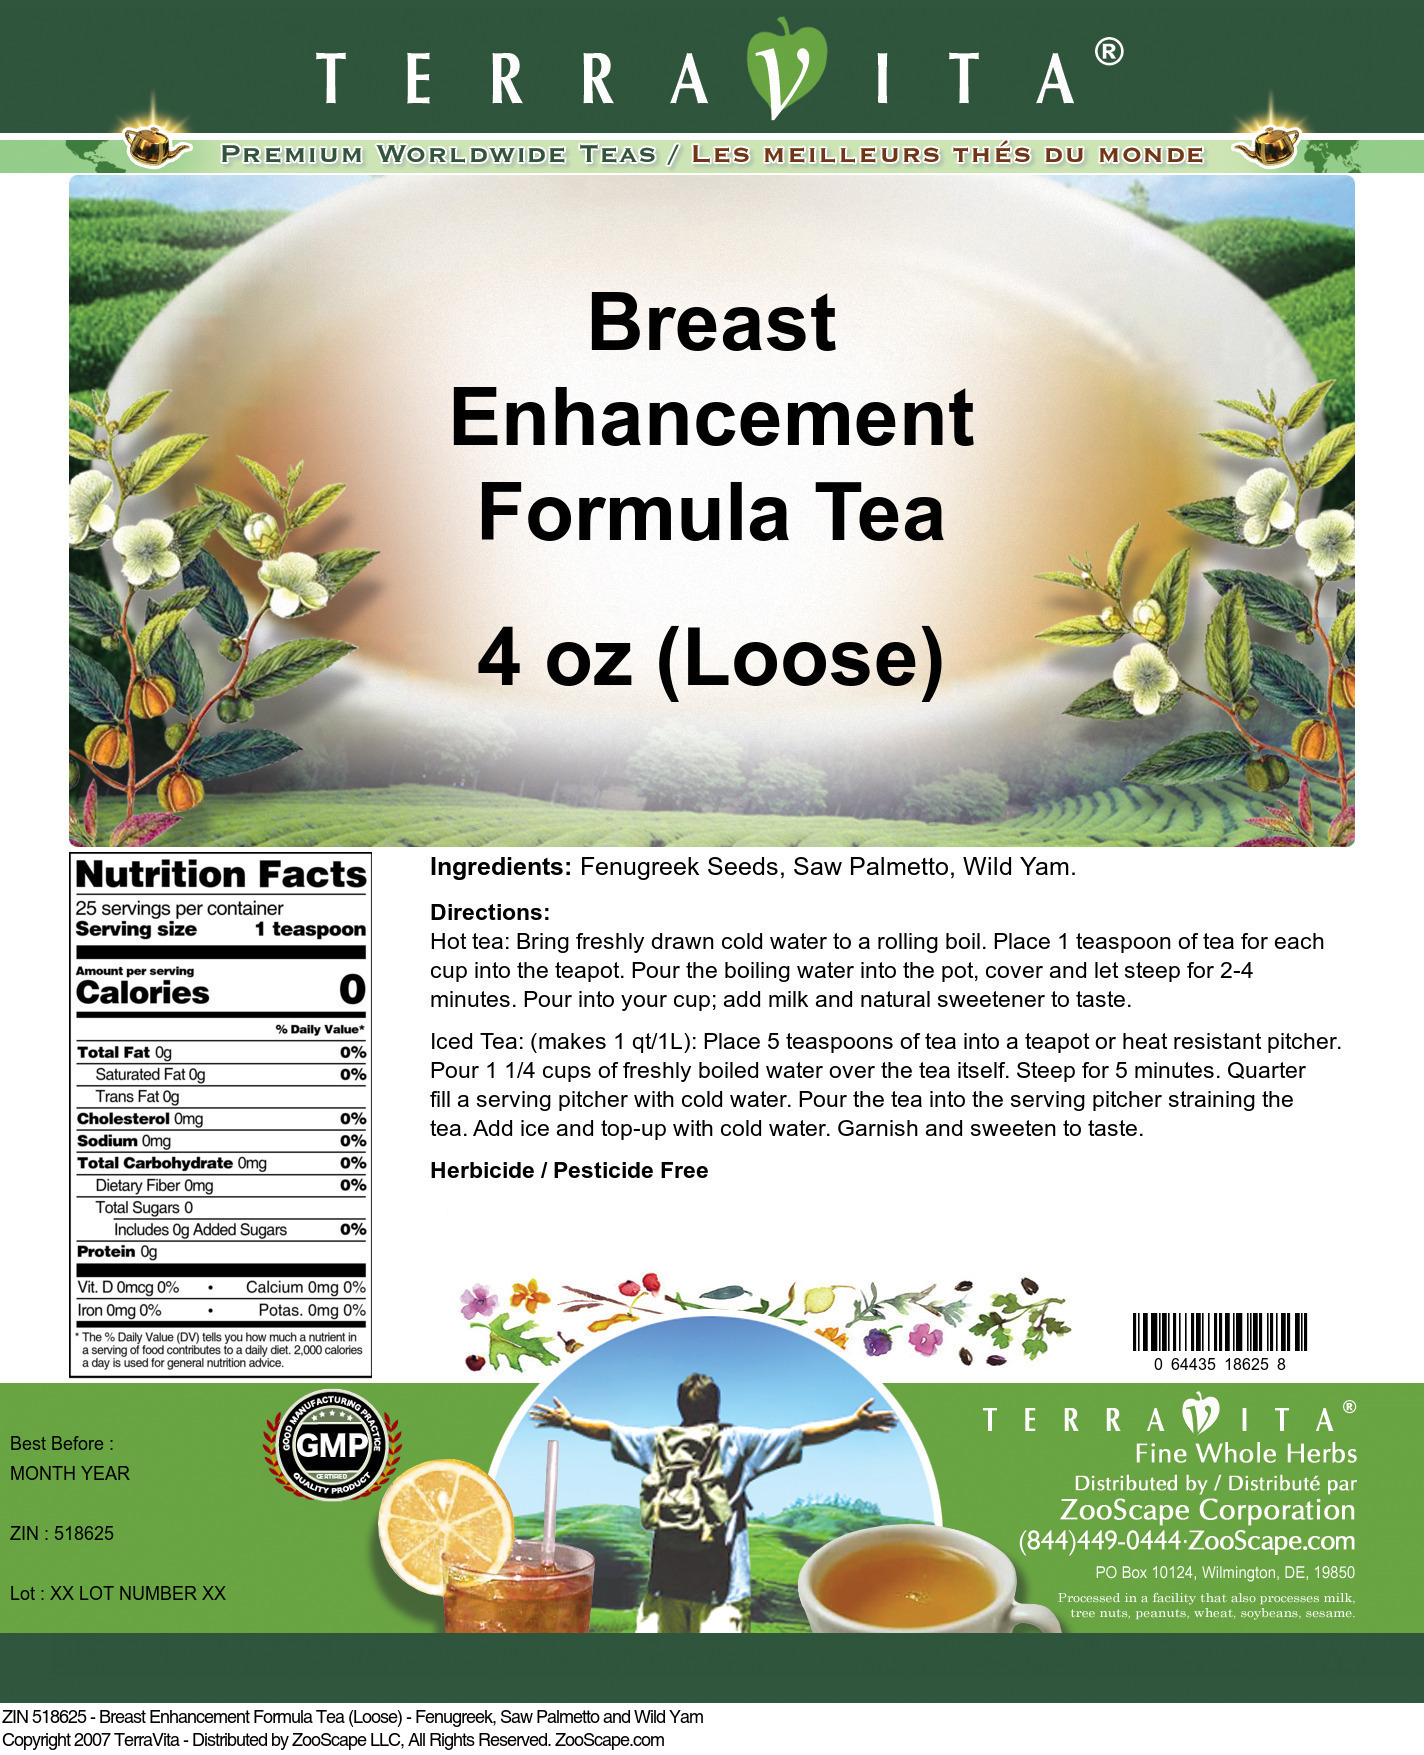 Breast Enhancement Formula Tea (Loose) - Fenugreek, Saw Palmetto and Wild Yam - Label